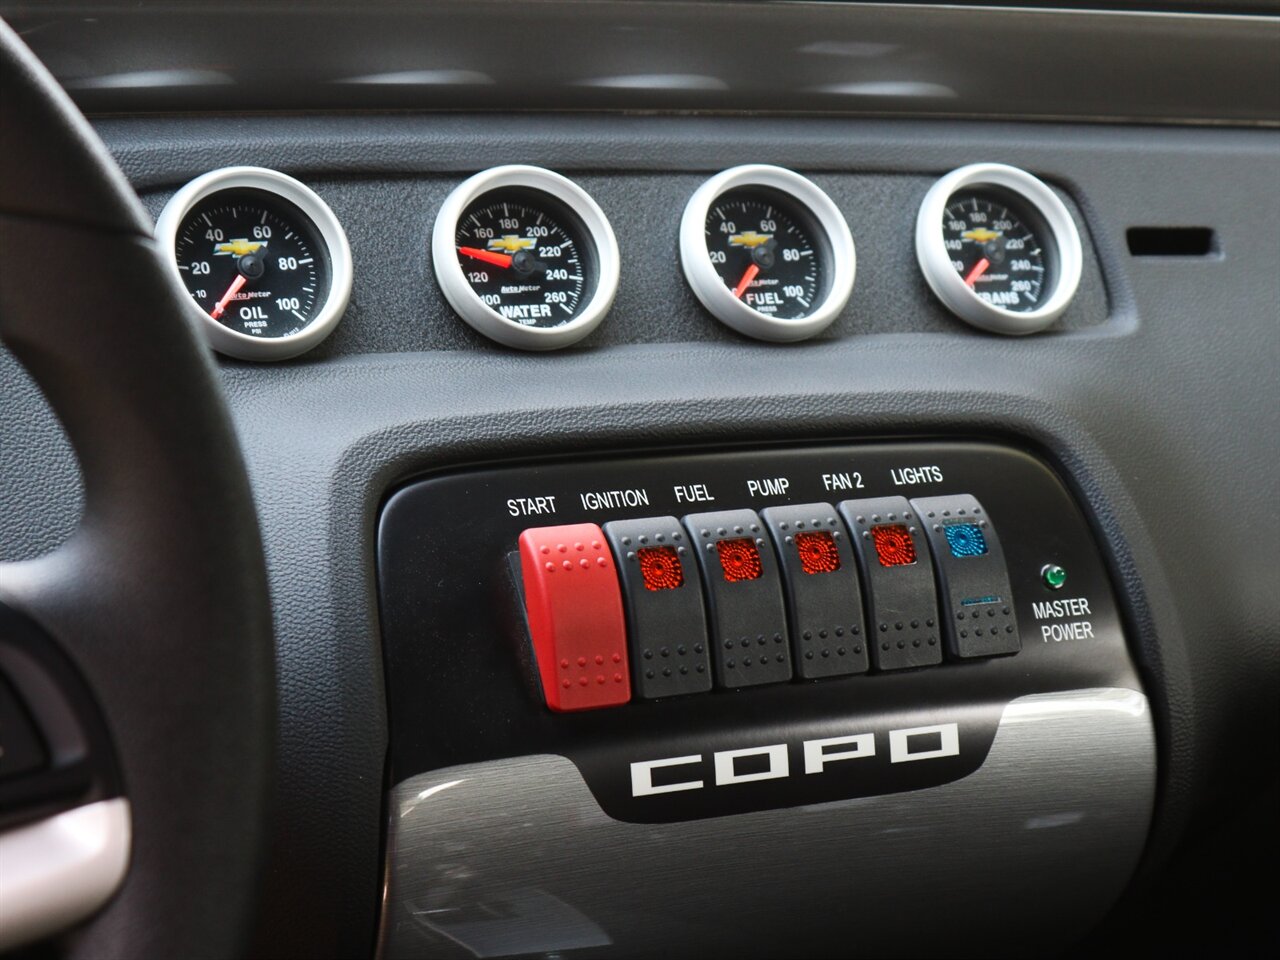 2015 Chevrolet Camaro Copo  #2 of 69 - Photo 15 - Springfield, MO 65802